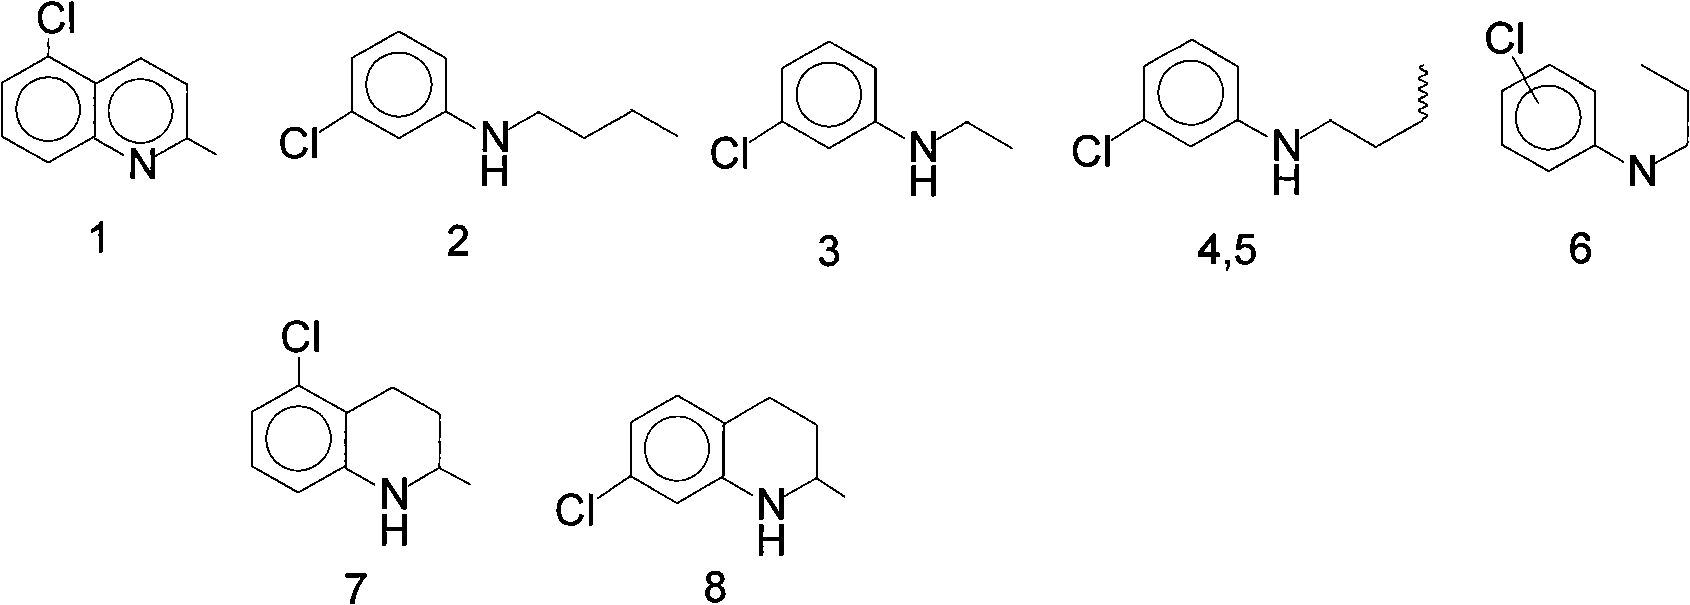 Method for preparing 7-chloroquinaldine by utilizing phase-transfer reaction